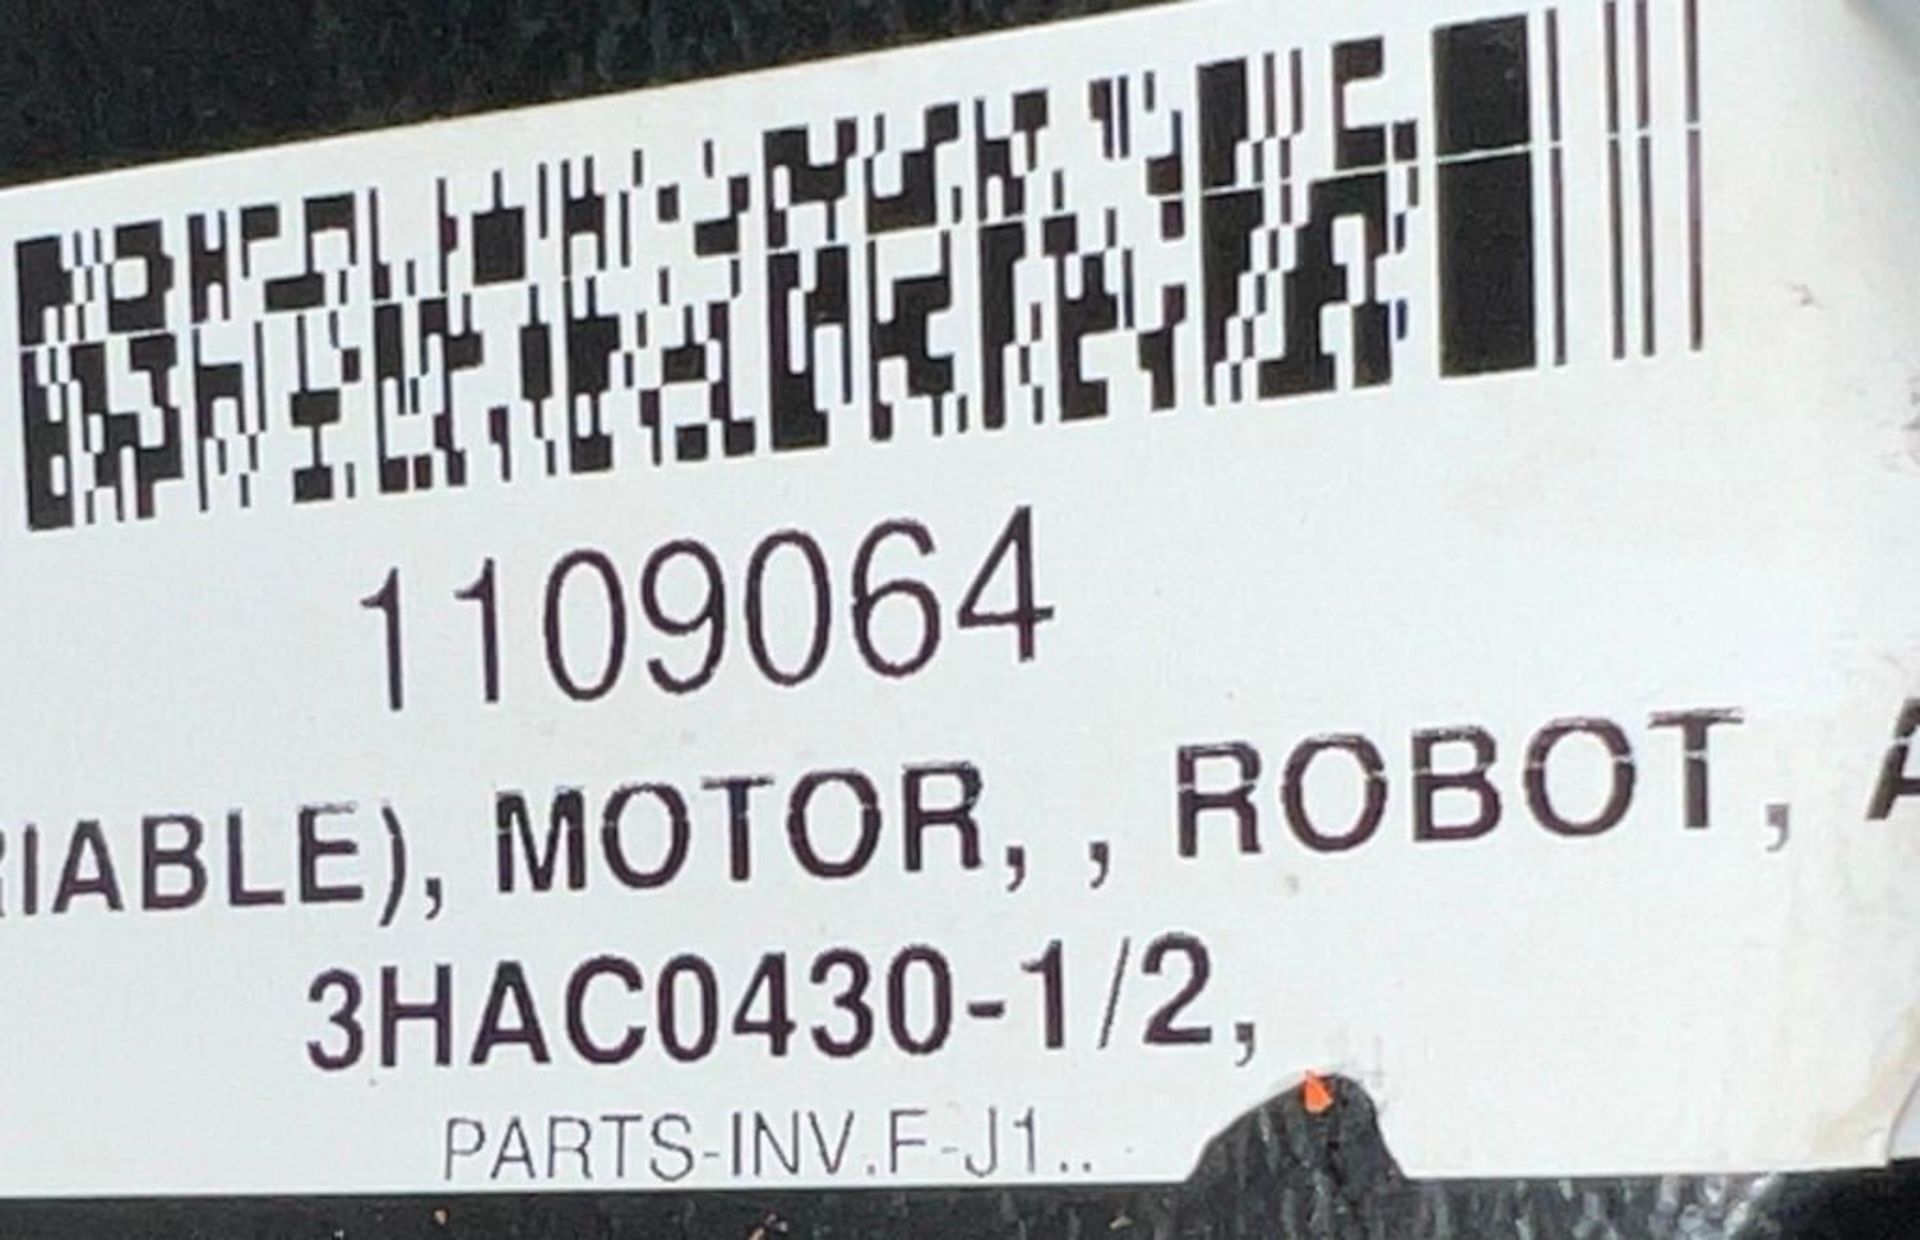 ABB #3HAC0430-1/2 Robot Motor - Image 4 of 4